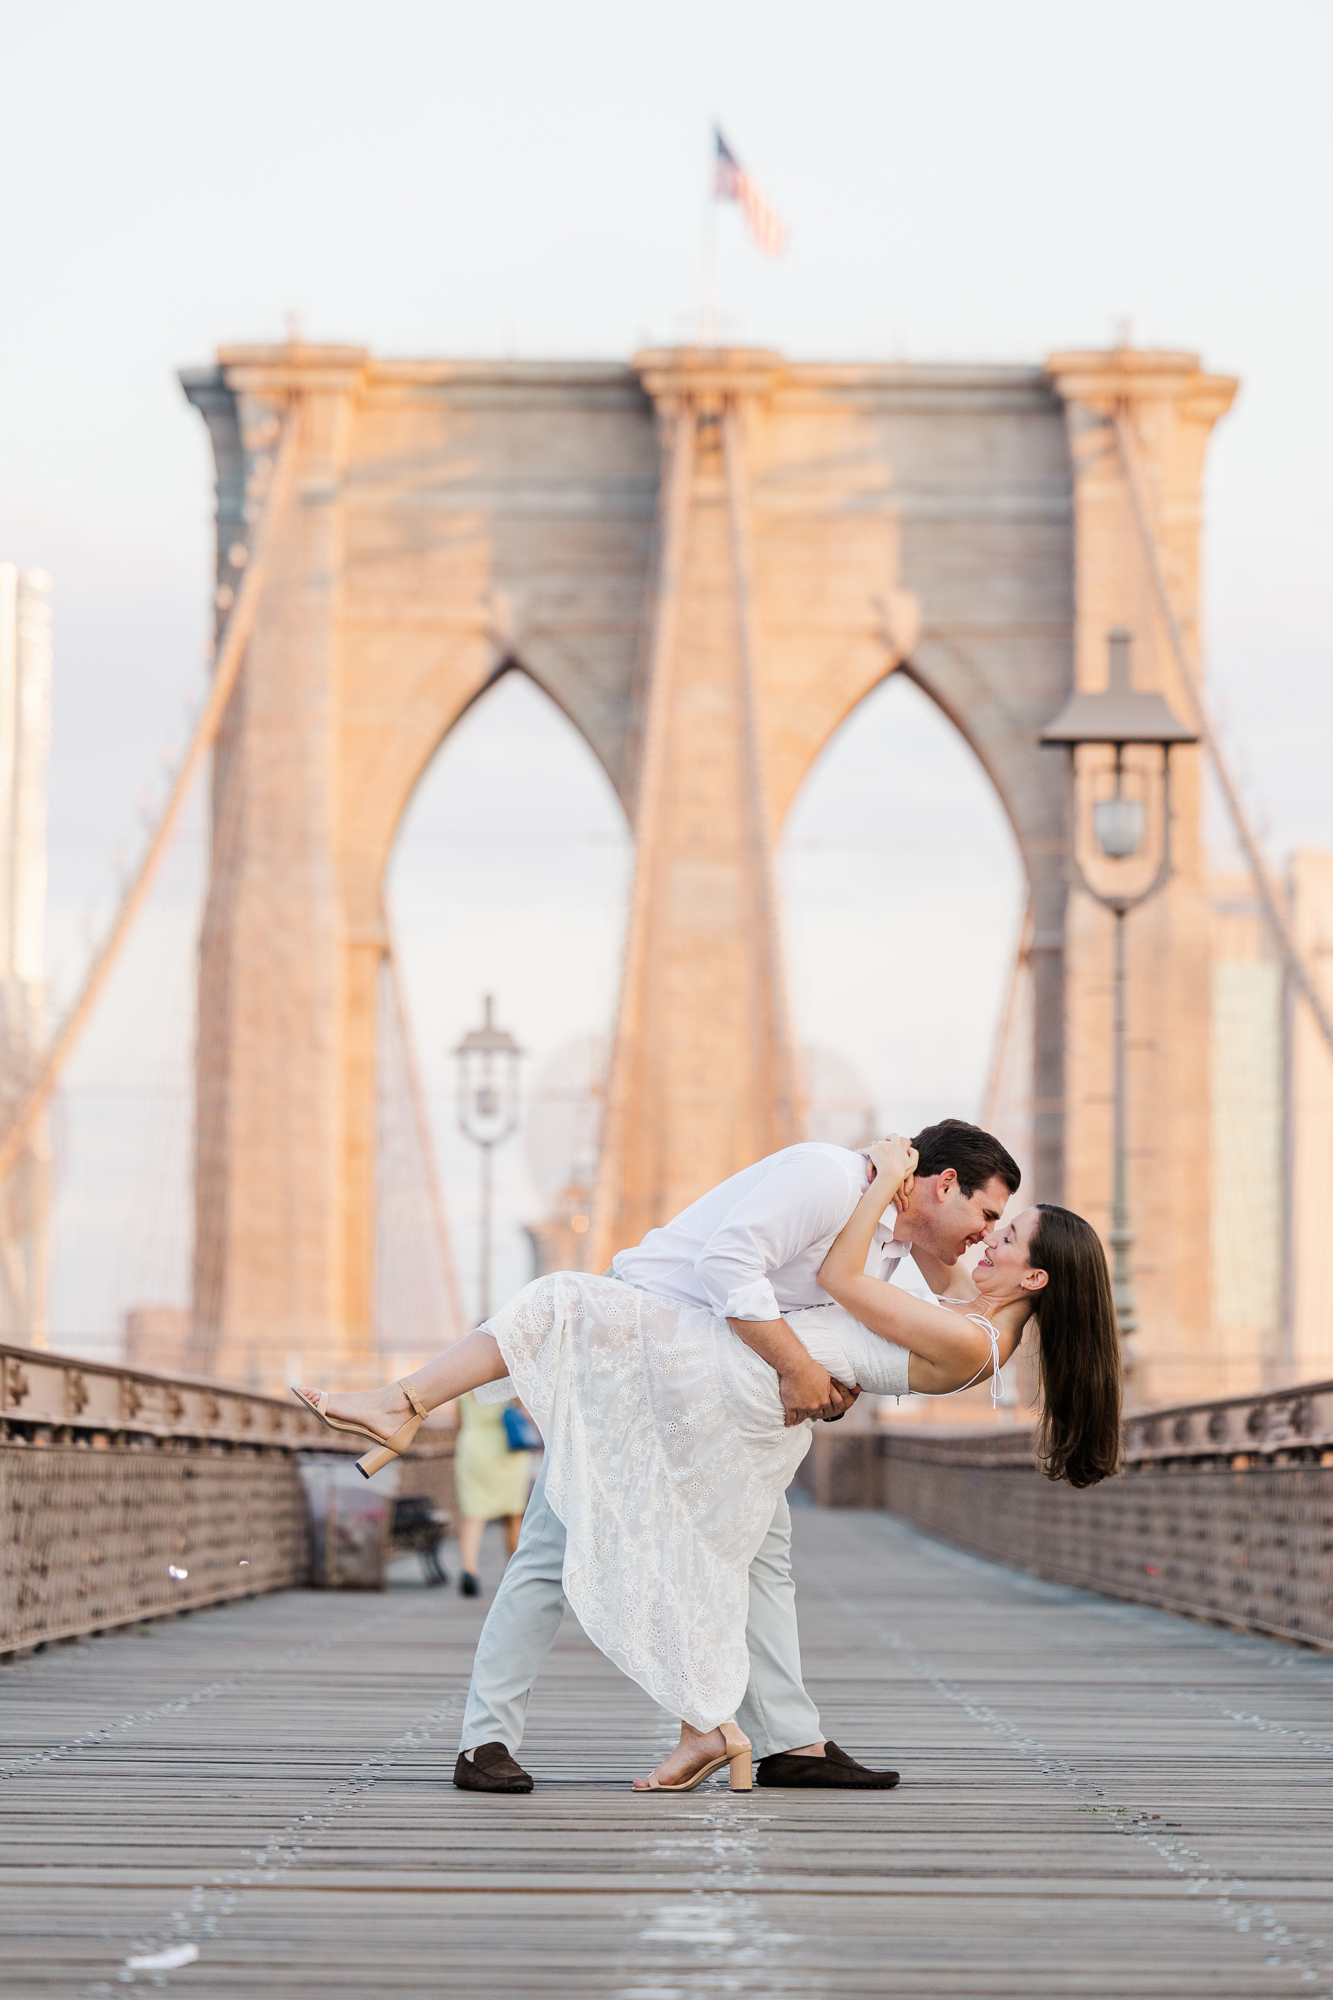 Playful Brooklyn Bridge Engagement Photography